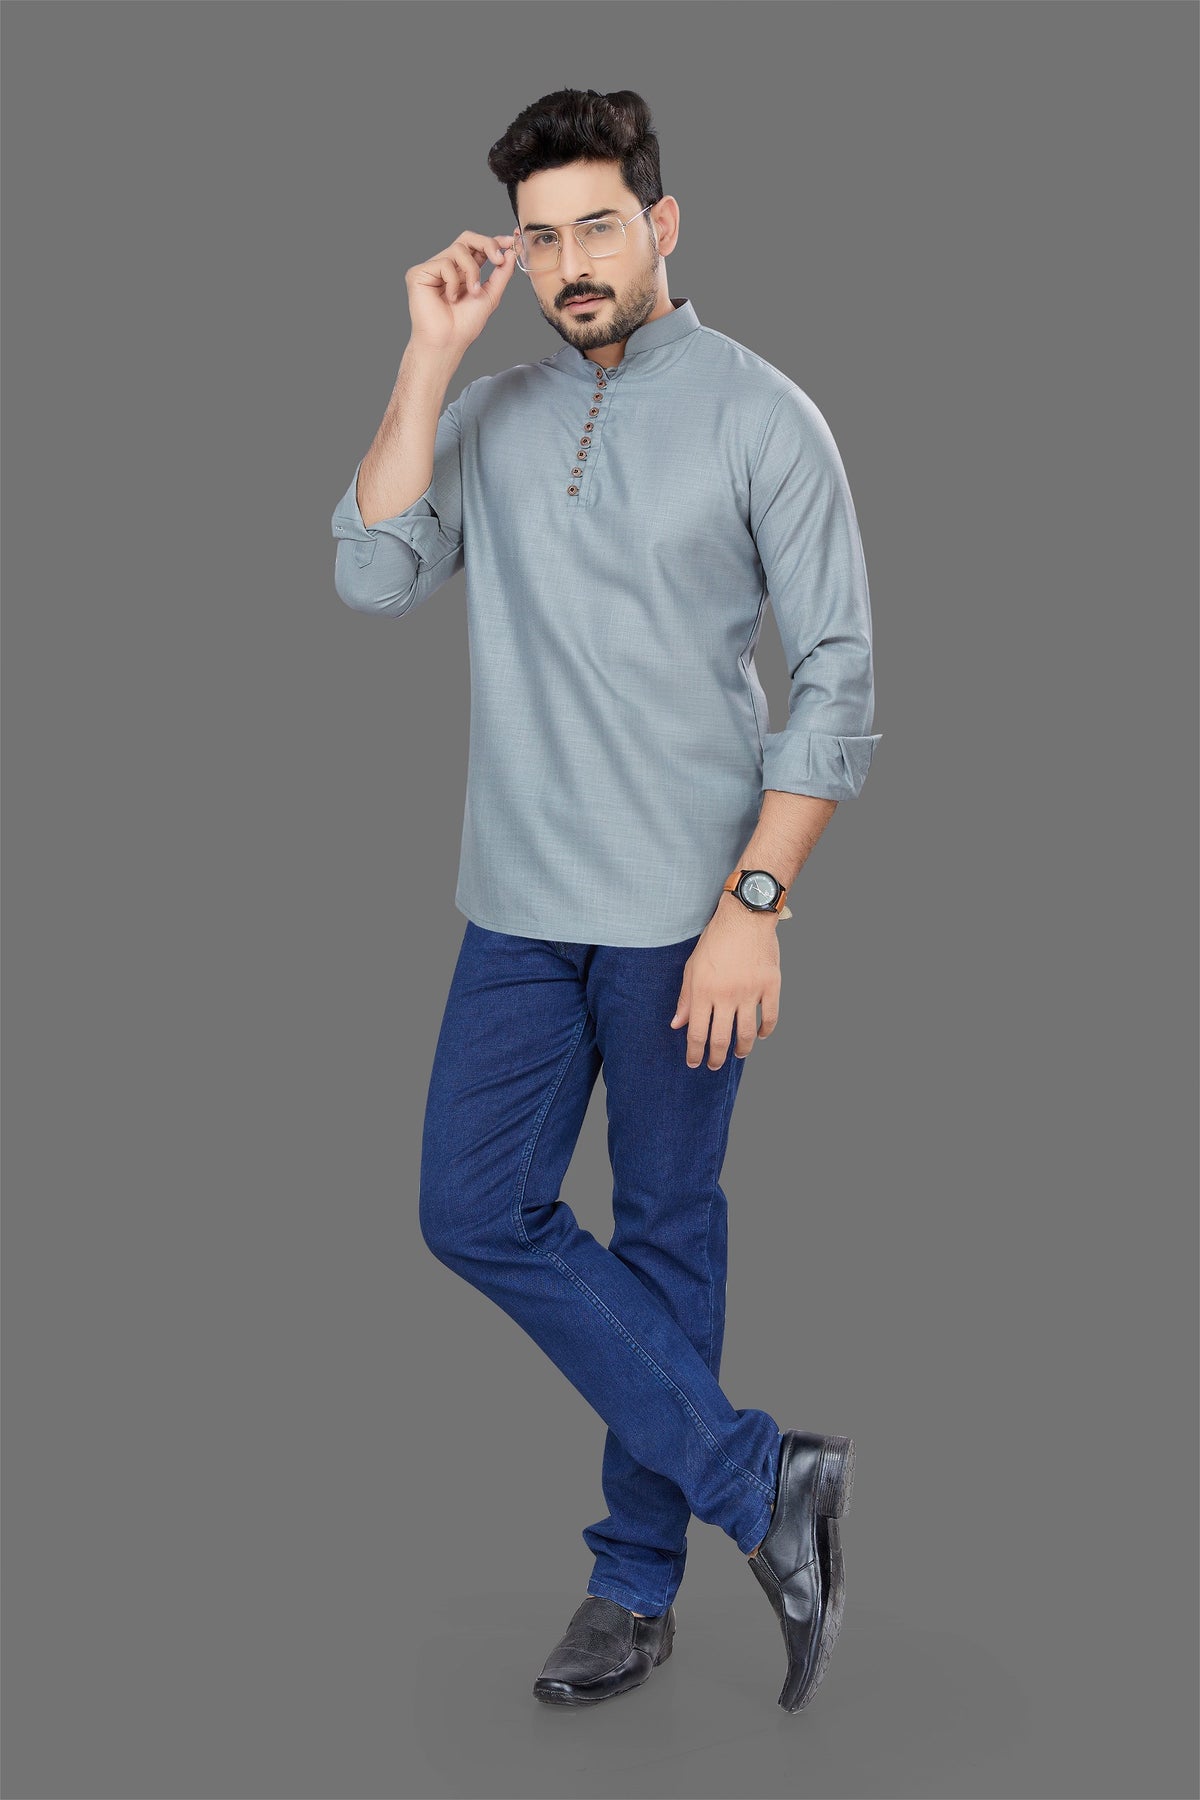 Grey Color Short Kurta - BUYZ.IN | Trendsetter Men's wear